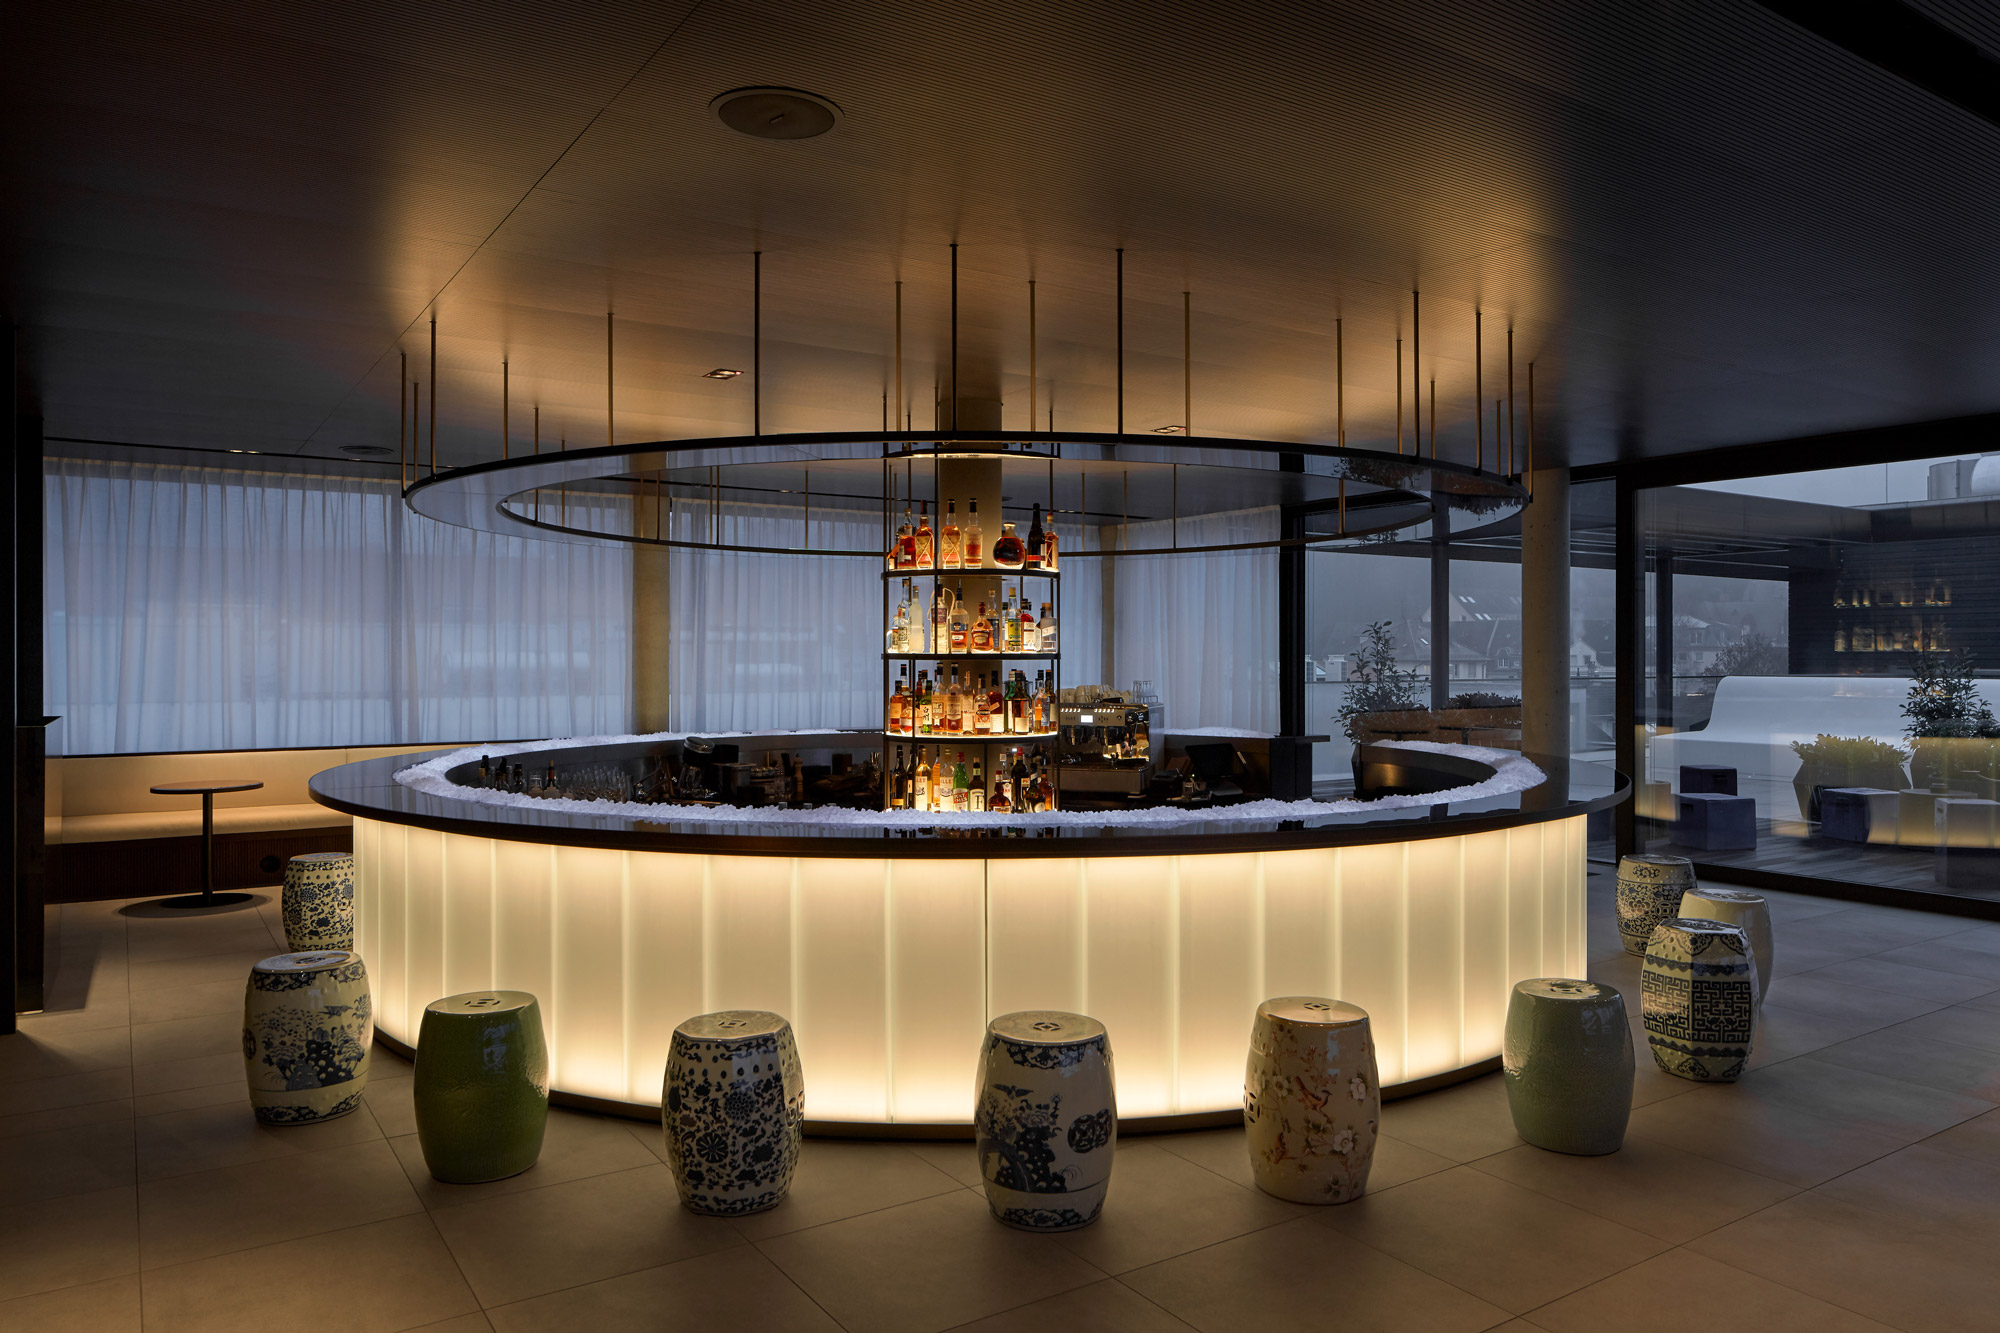 Round, modern hotel bar with mood lighting